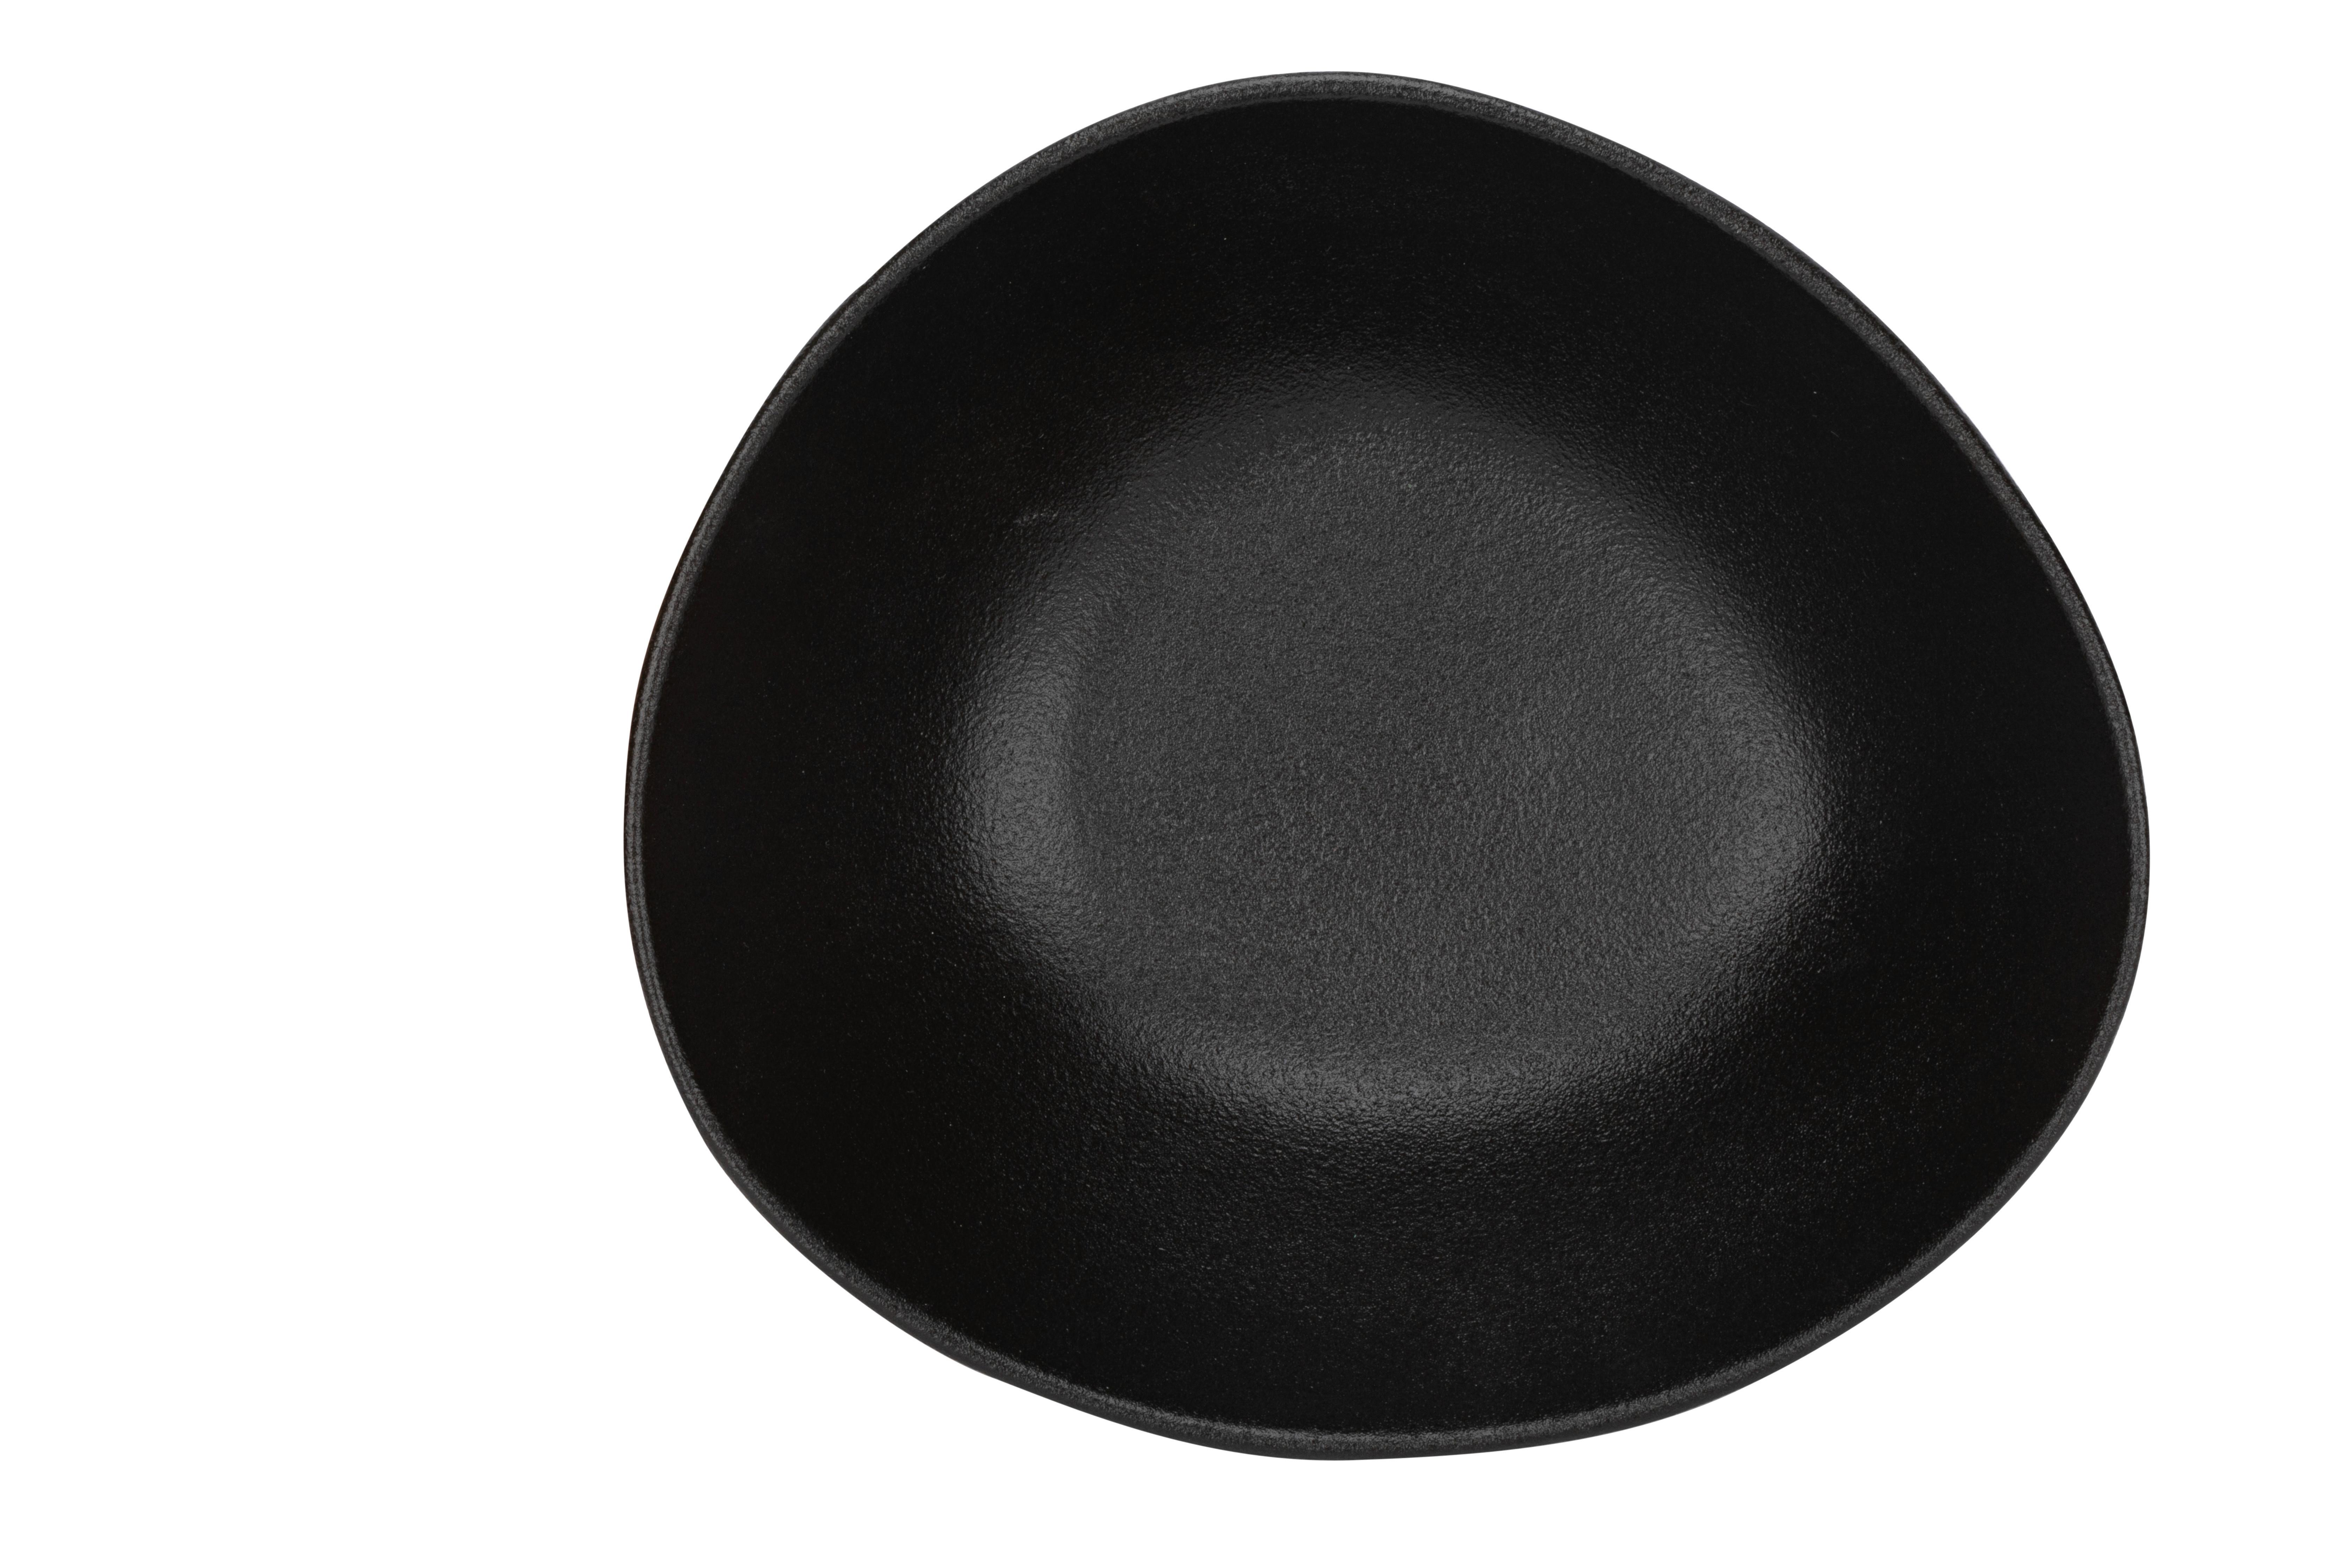 Miska Na Müsli Haruki - černá, Moderní, keramika (19/17,1/6,8cm) - Premium Living